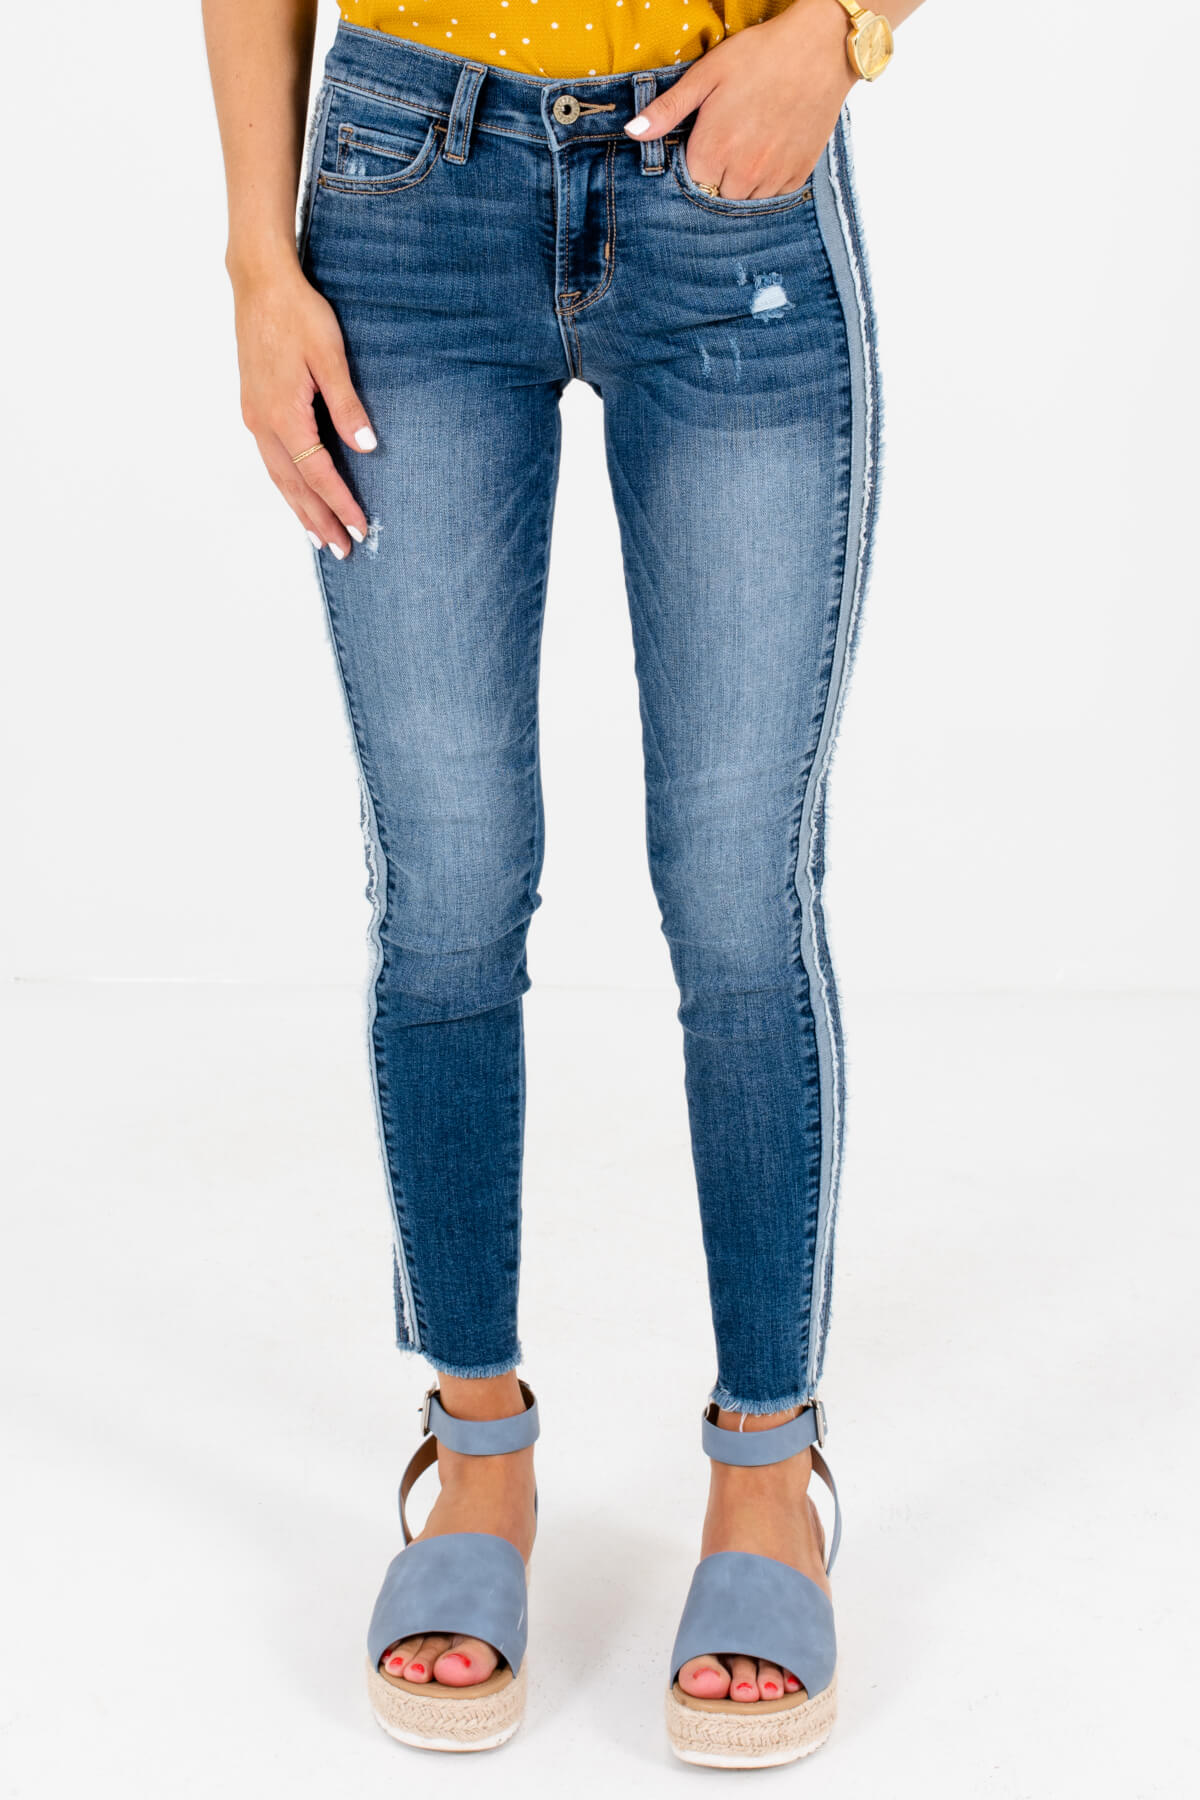 Medium Wash Denim Blue Skinny Style Boutique Jeans for Women